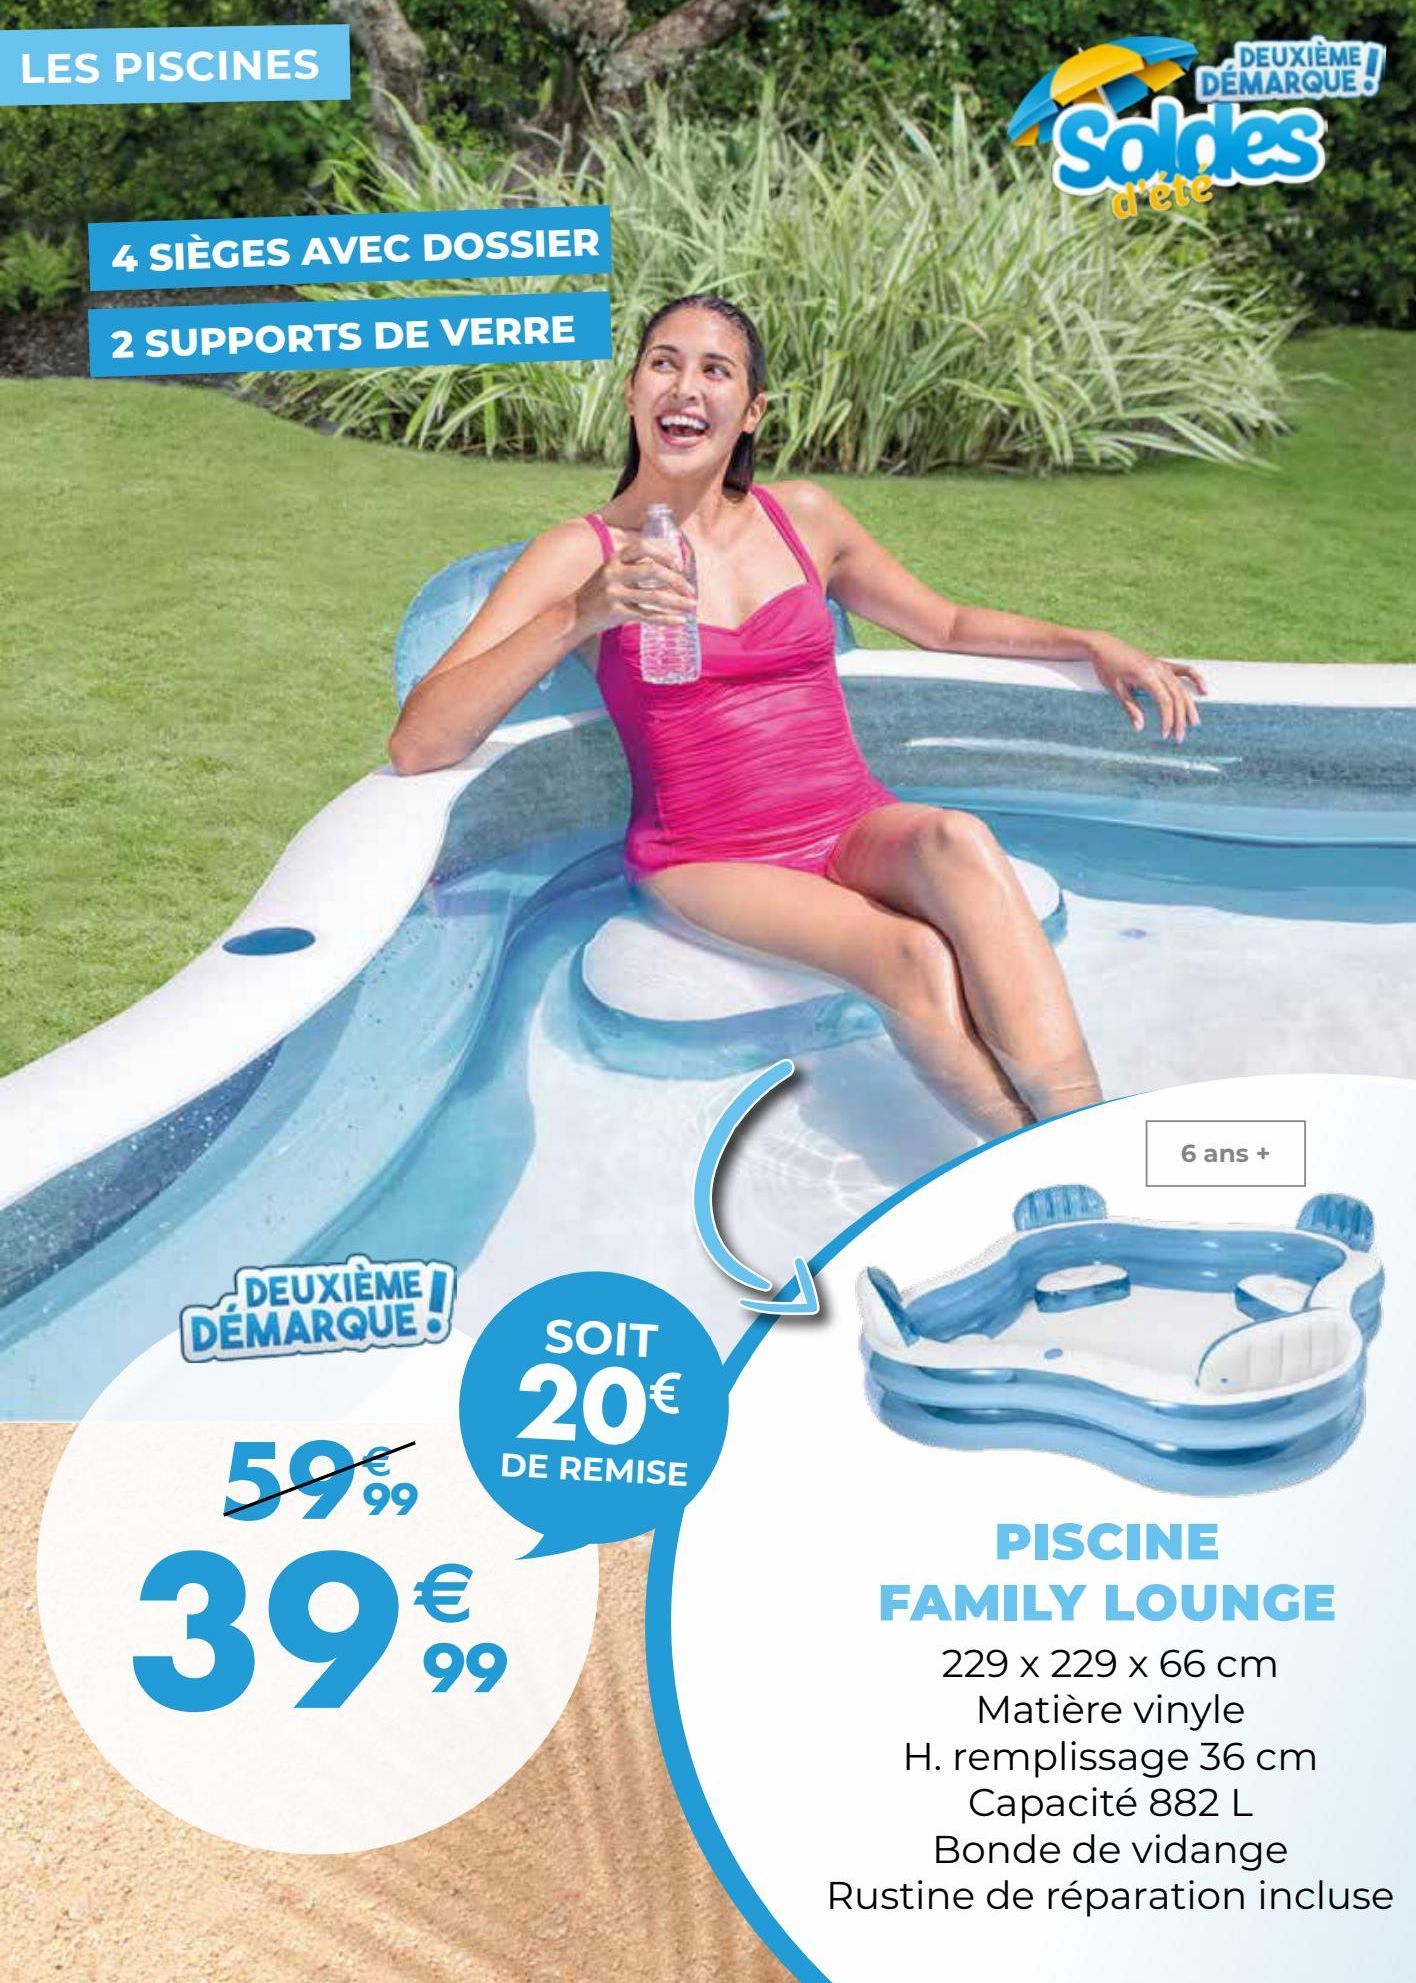 piscine family lounge